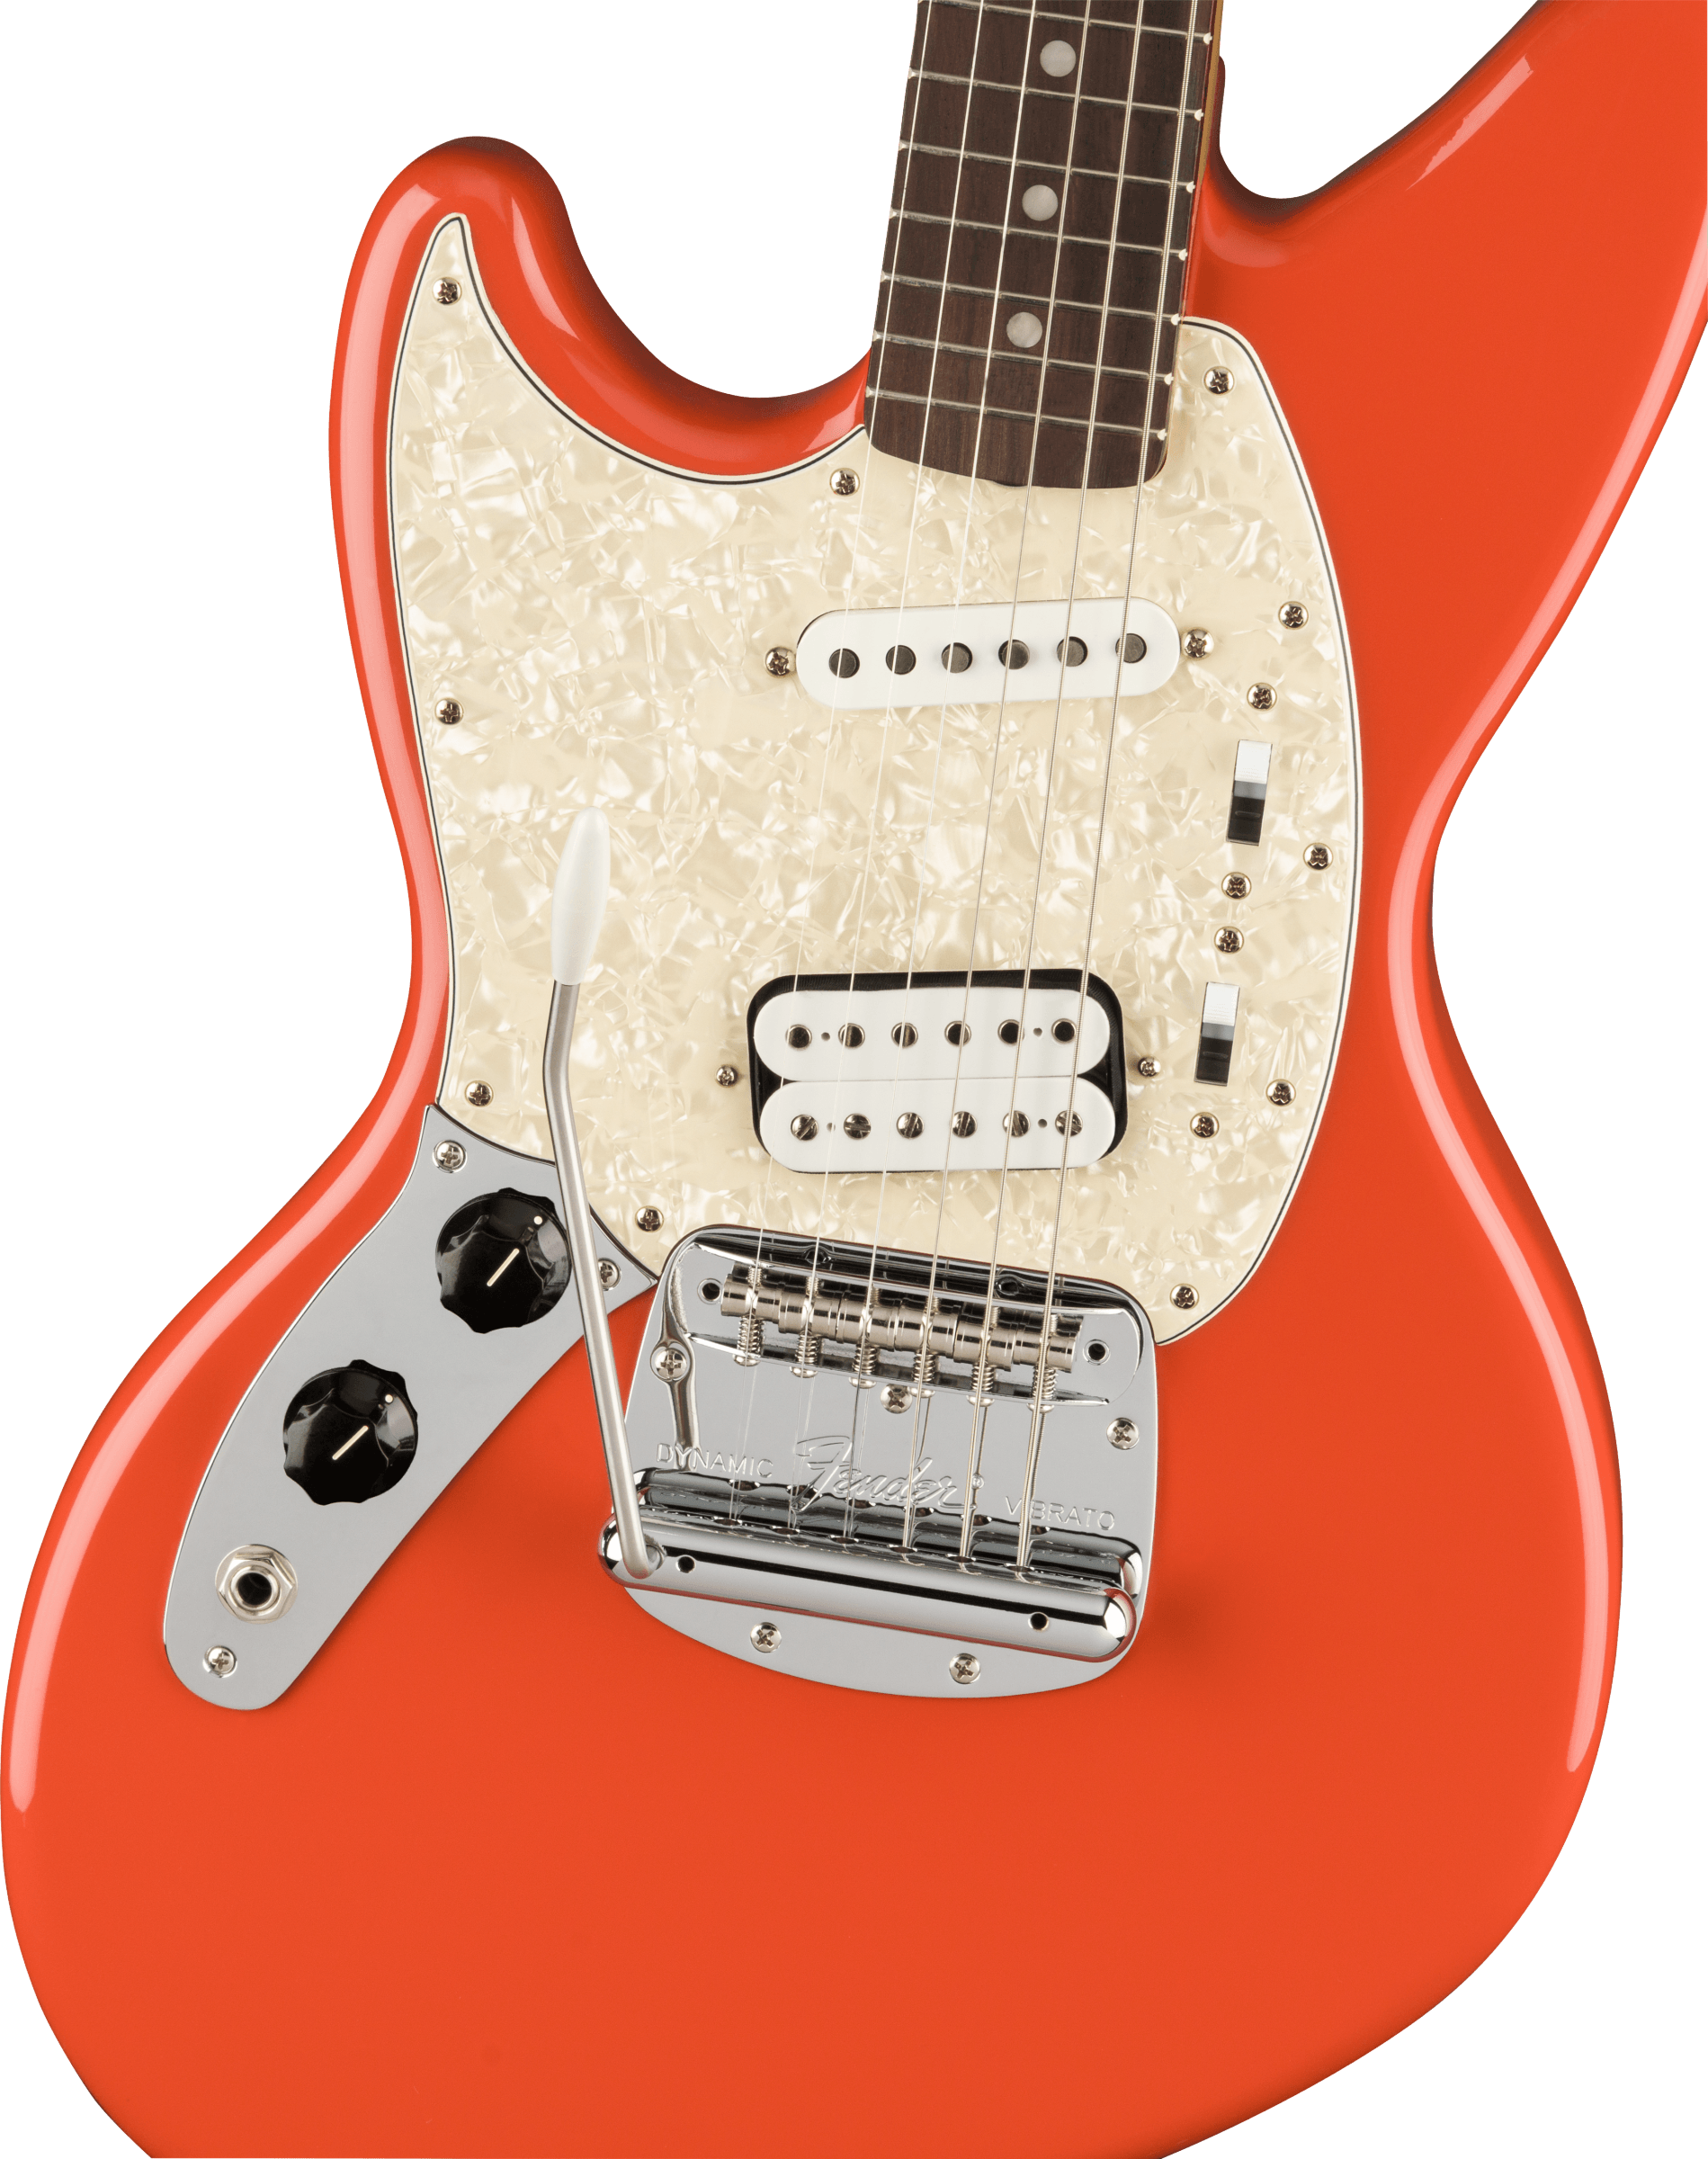 Fender Jag-stang Kurt Cobain Artist Gaucher Hs Trem Rw - Fiesta Red - Left-handed electric guitar - Variation 2